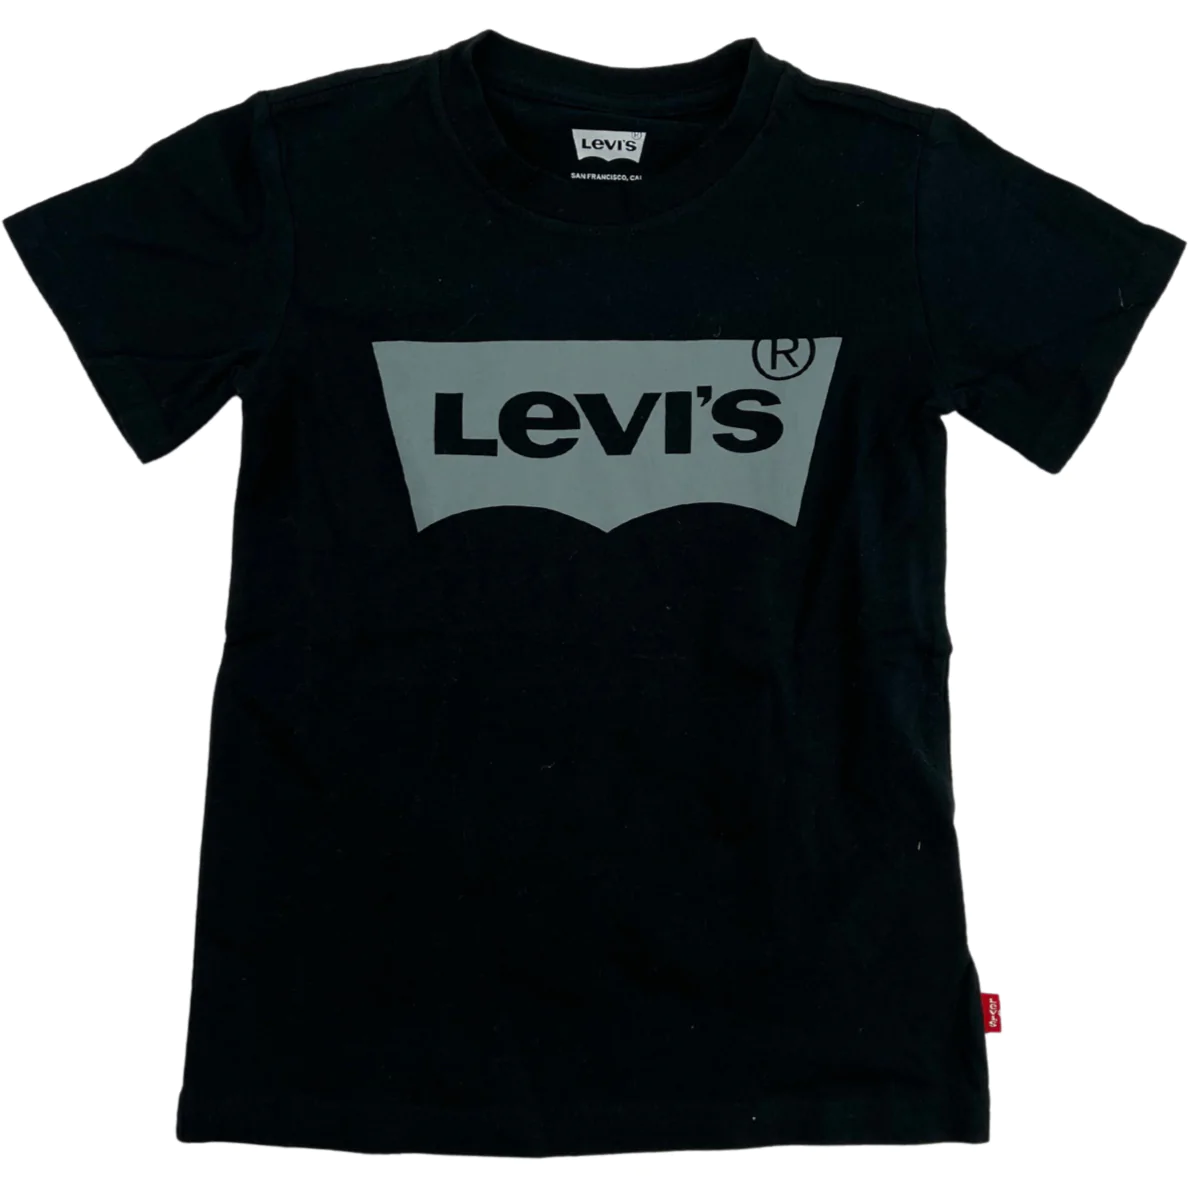 Levi's Boy's Short Sleeve Shirt: Black / Boy's T-Shirt / Size Small (6)